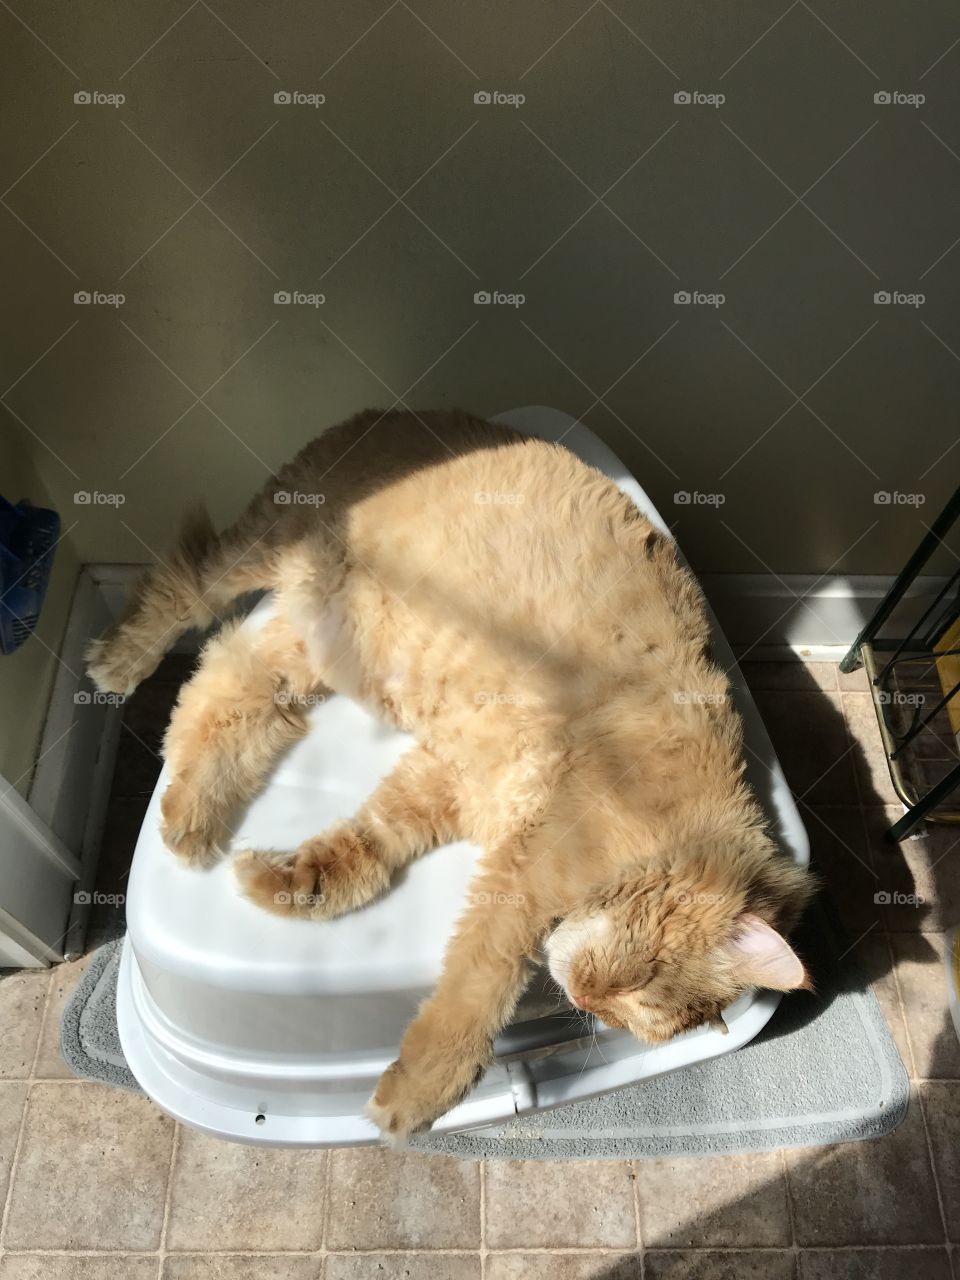 Leo the cat sunbathing 